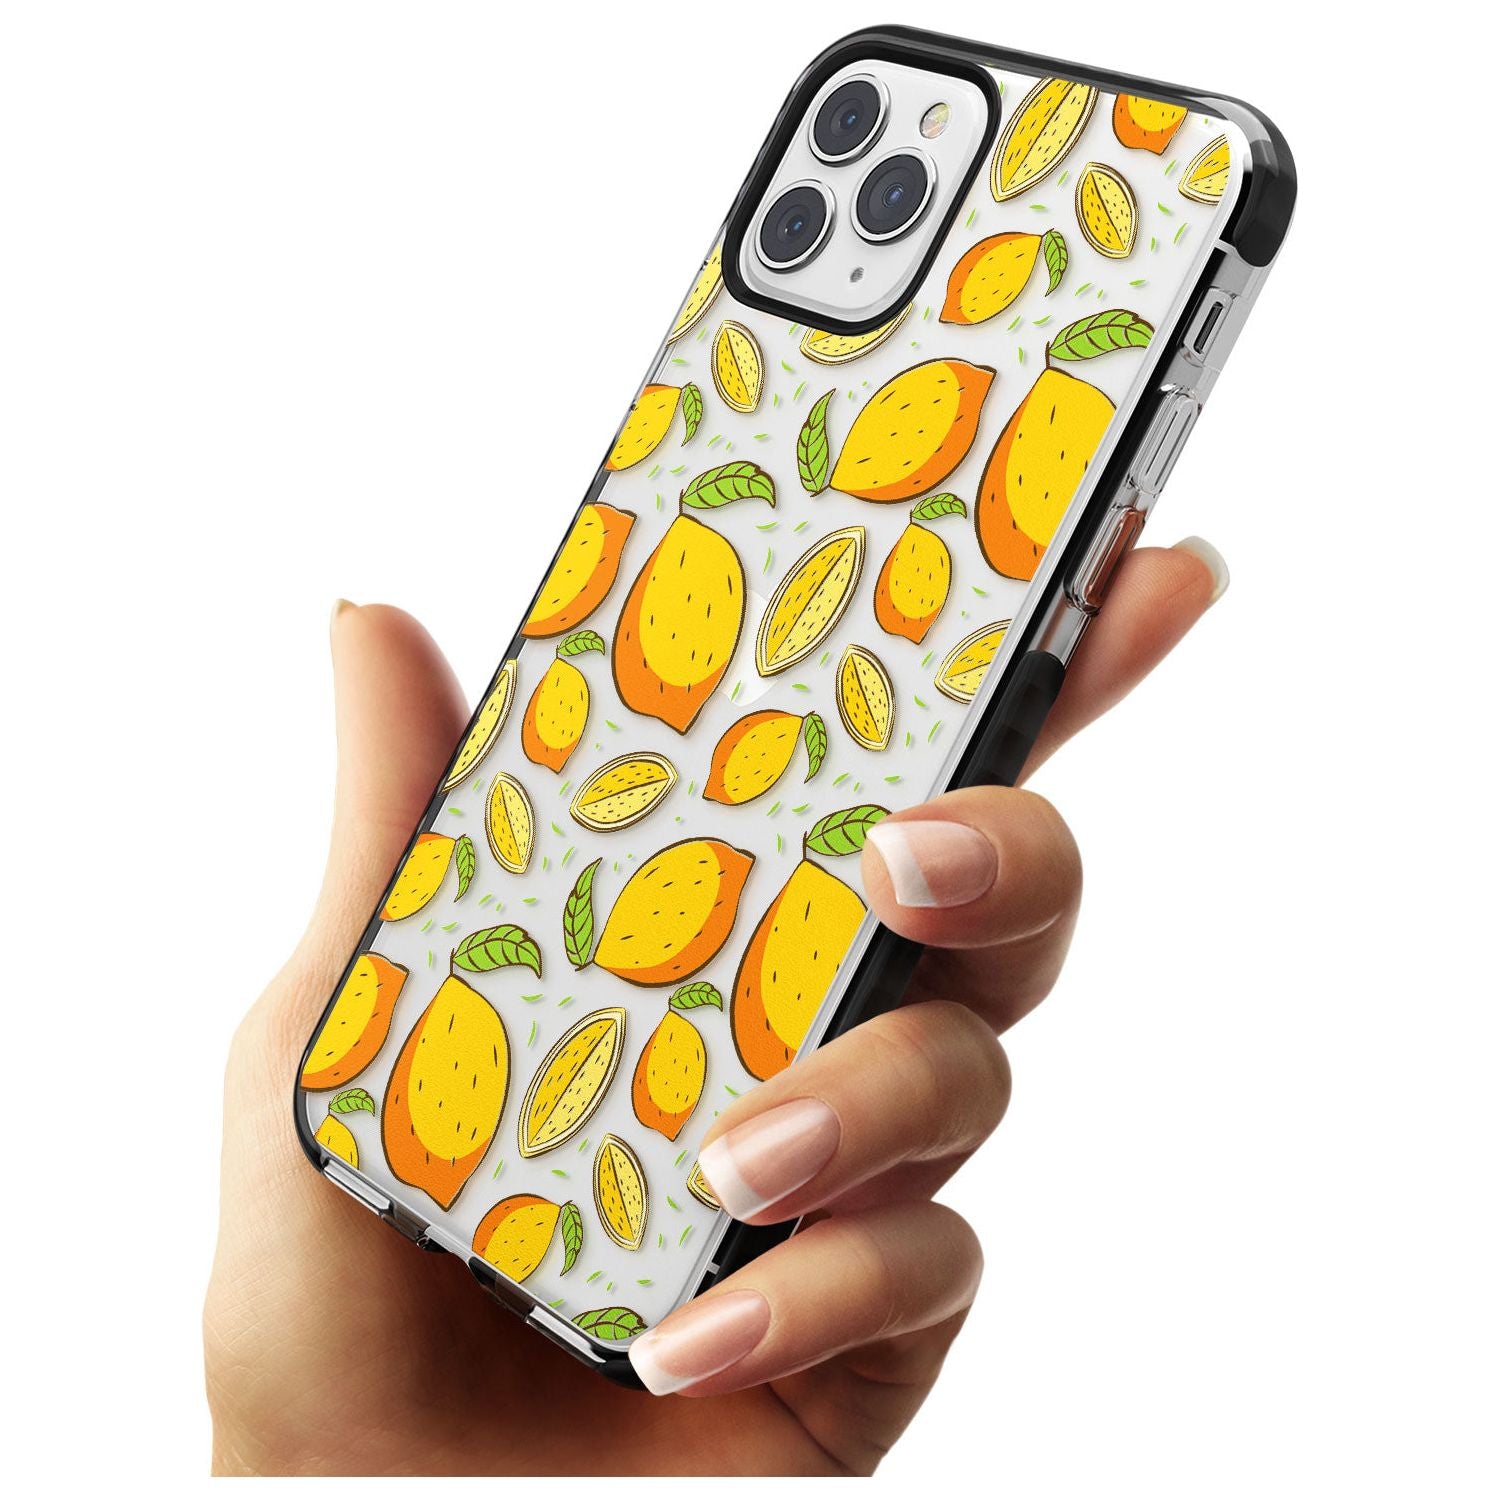 Lemon Pattern Black Impact Phone Case for iPhone 11